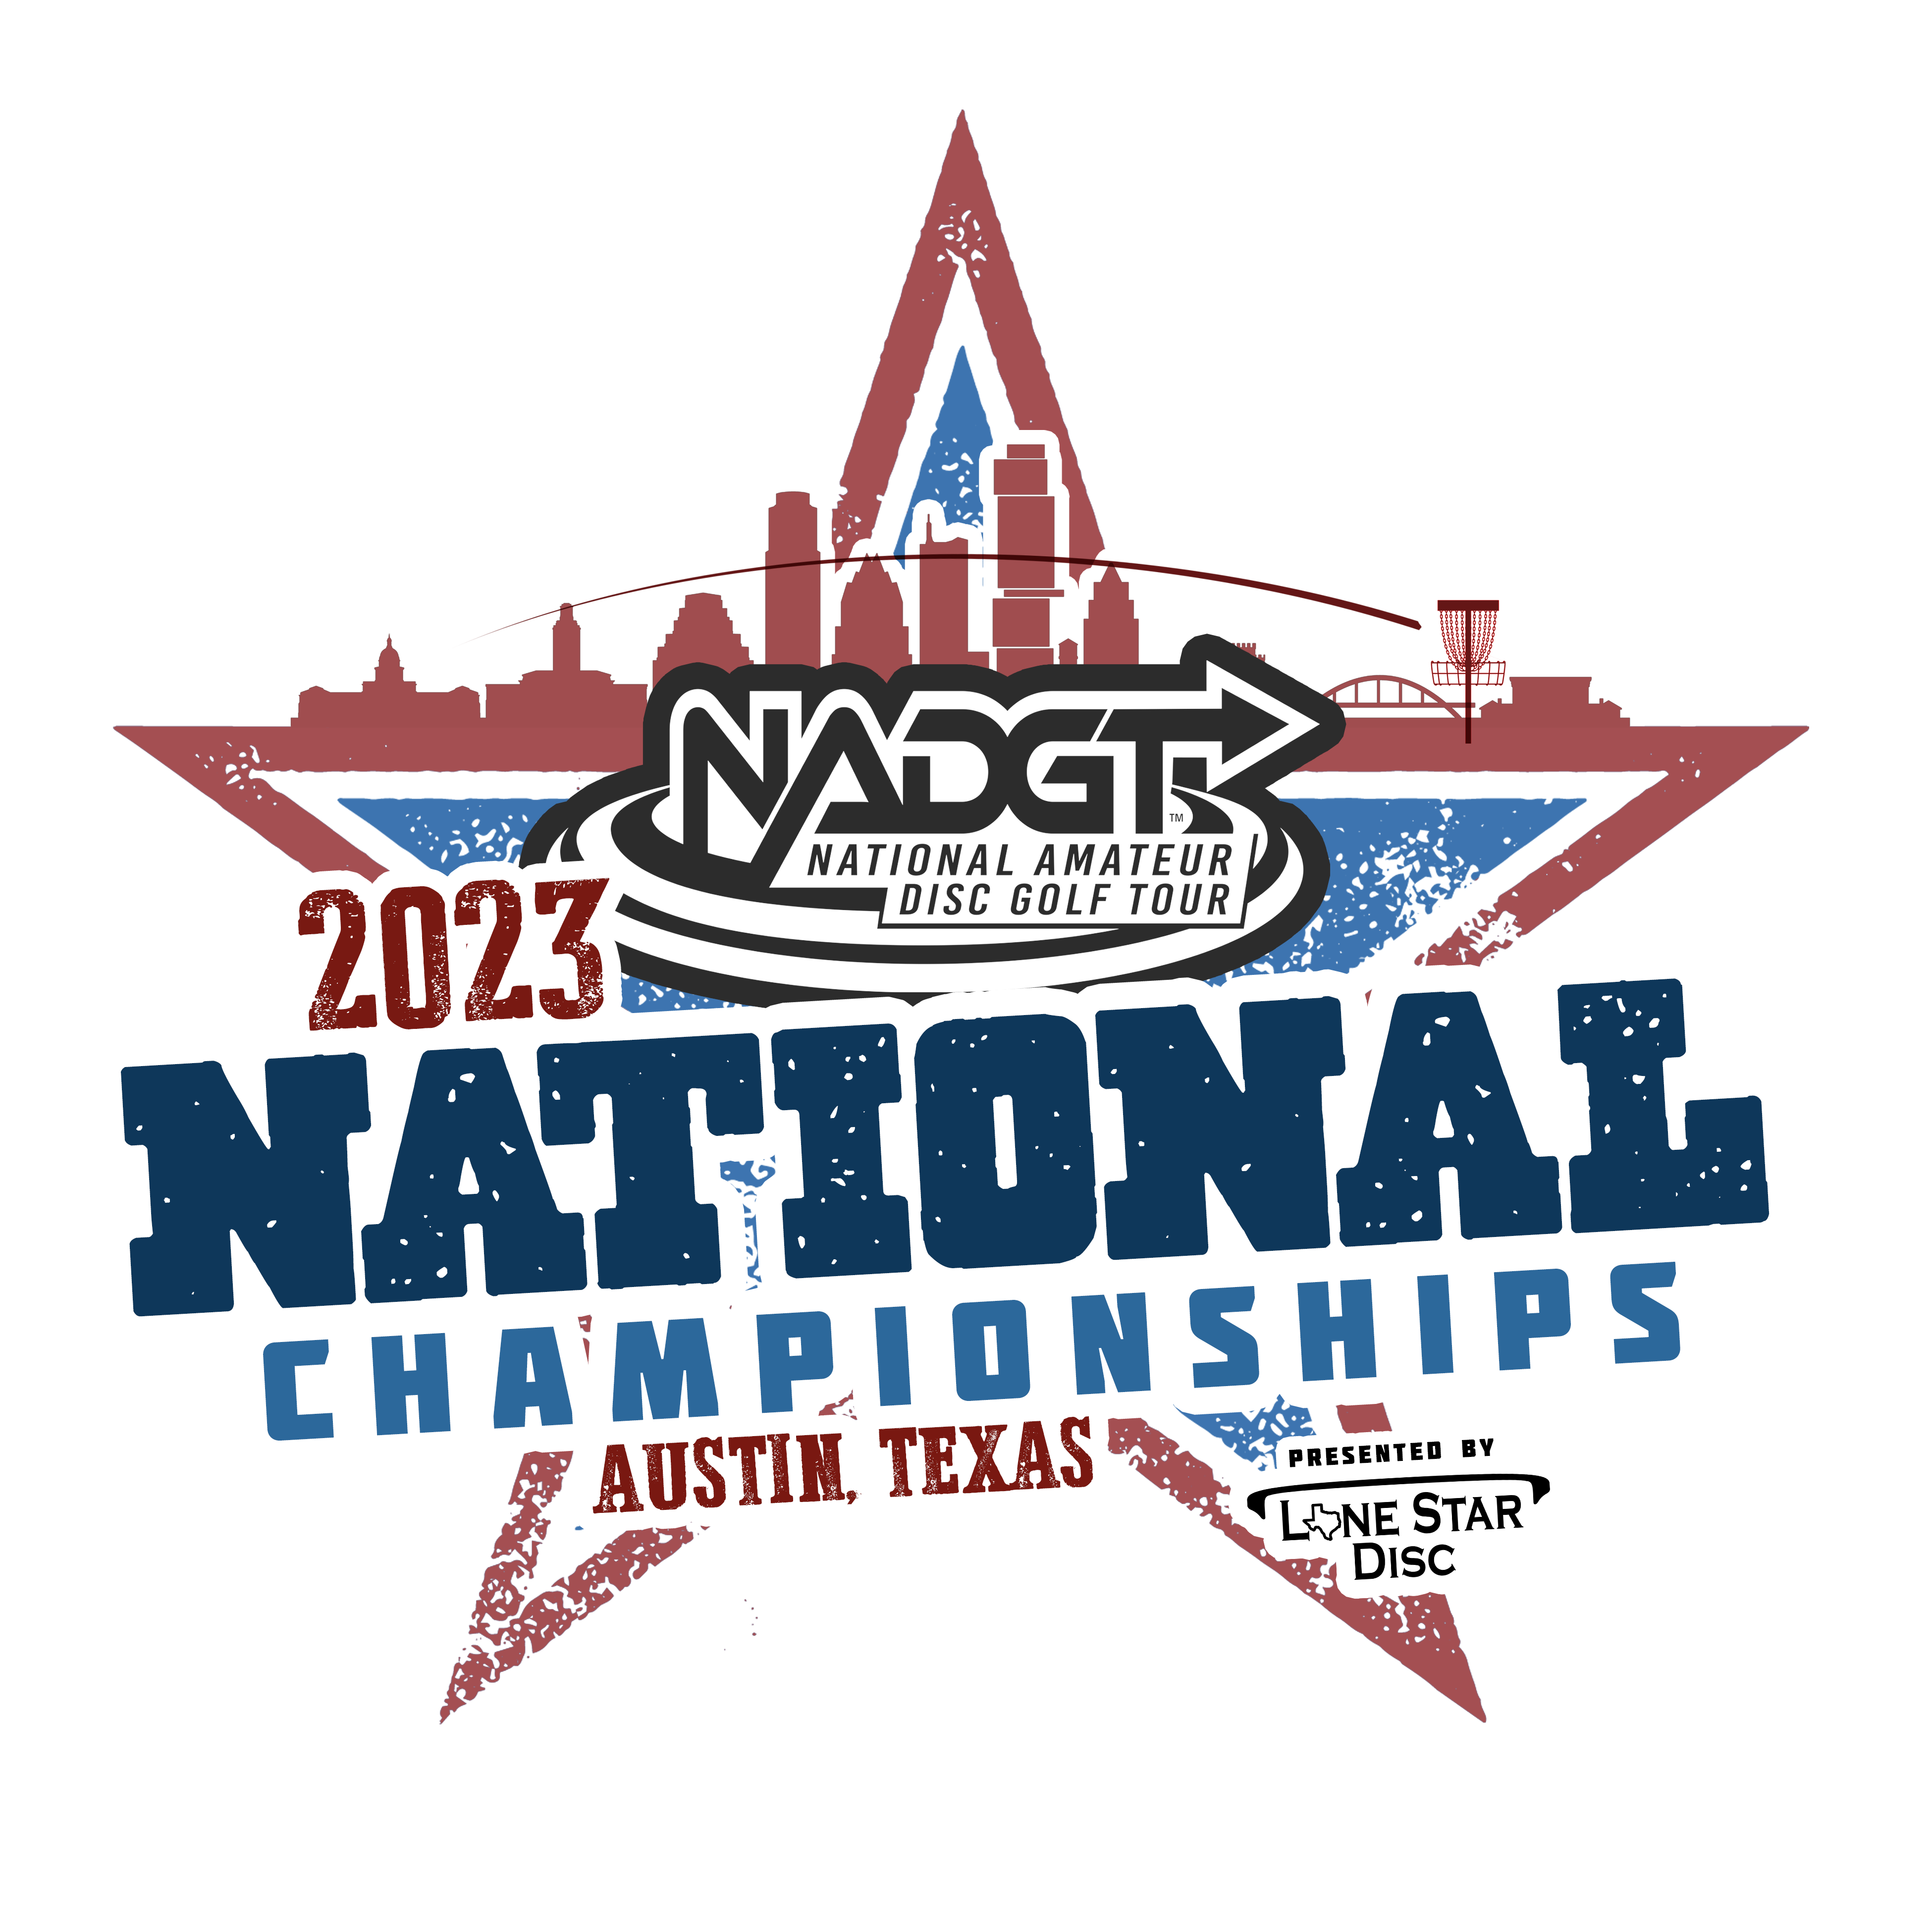 NADGT Championships Logo